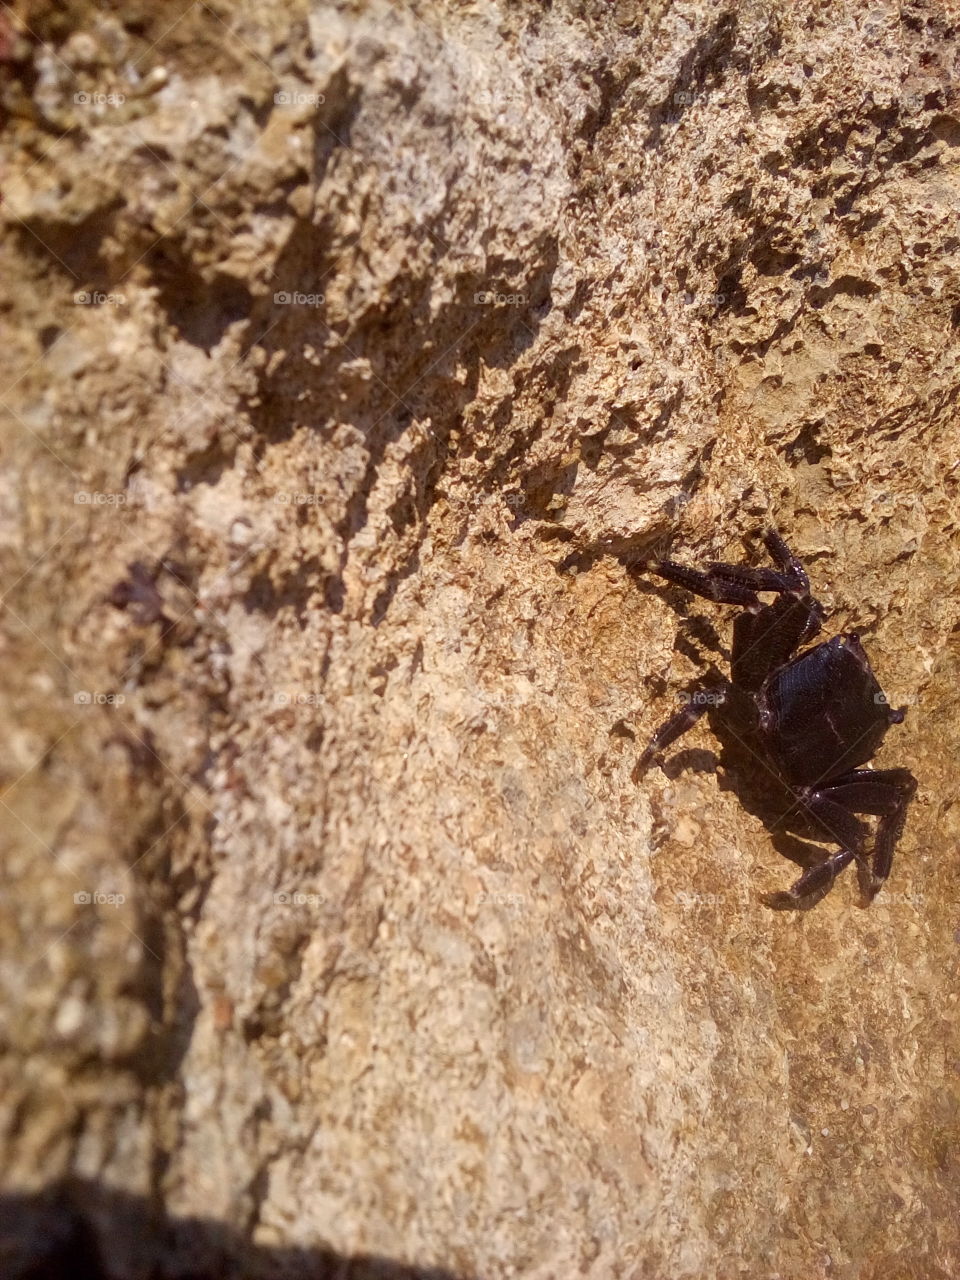 Black Crab on a Rock